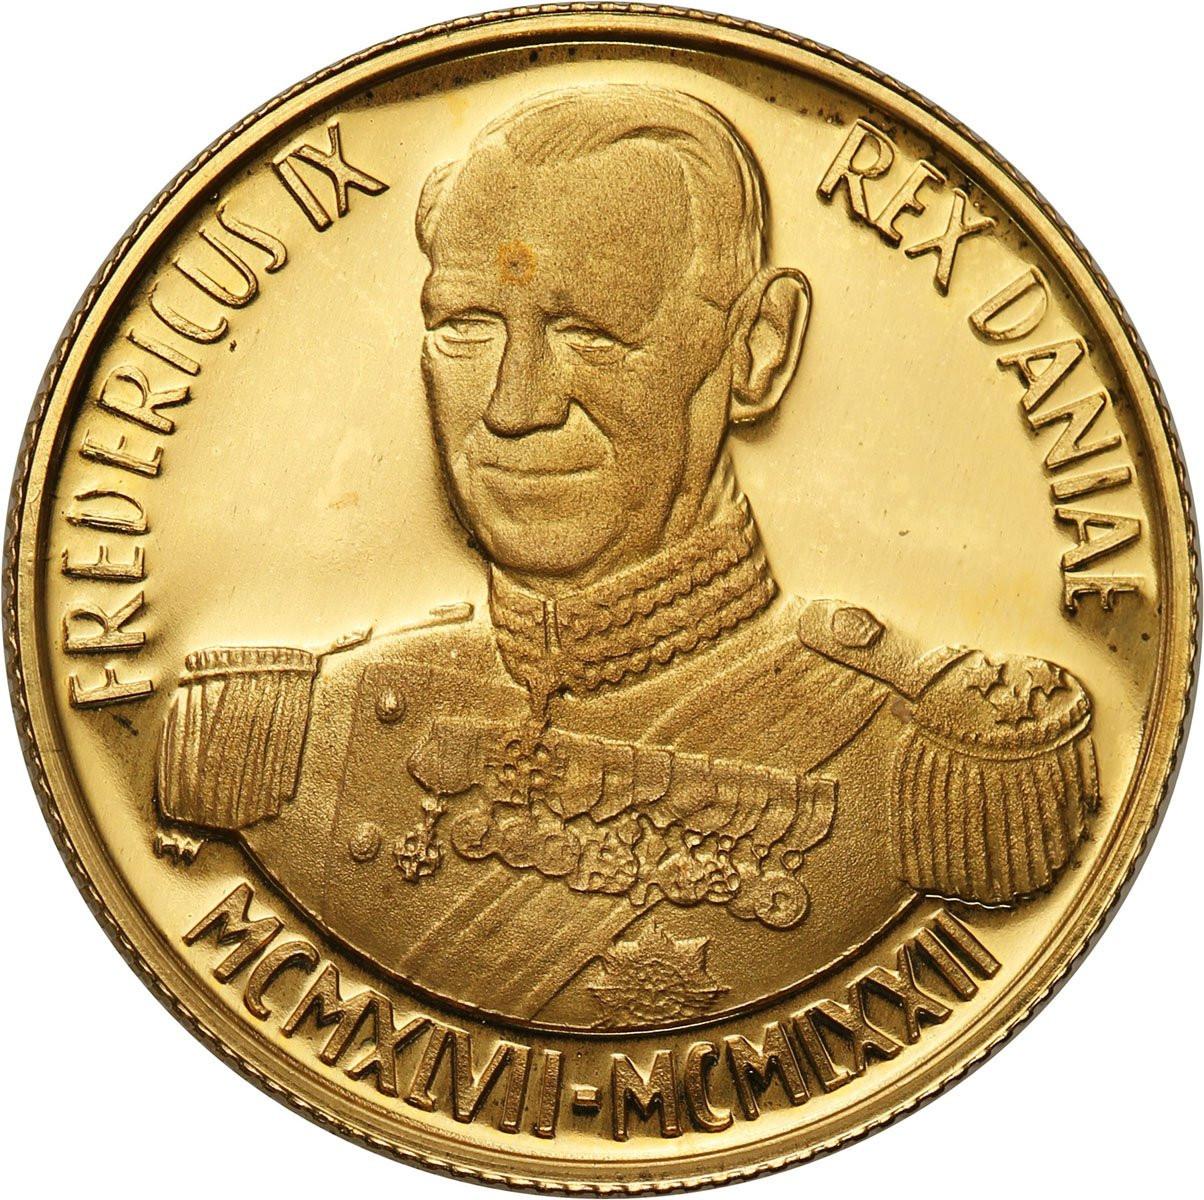 Jugosławia. Medal 1972 – Frederik IX